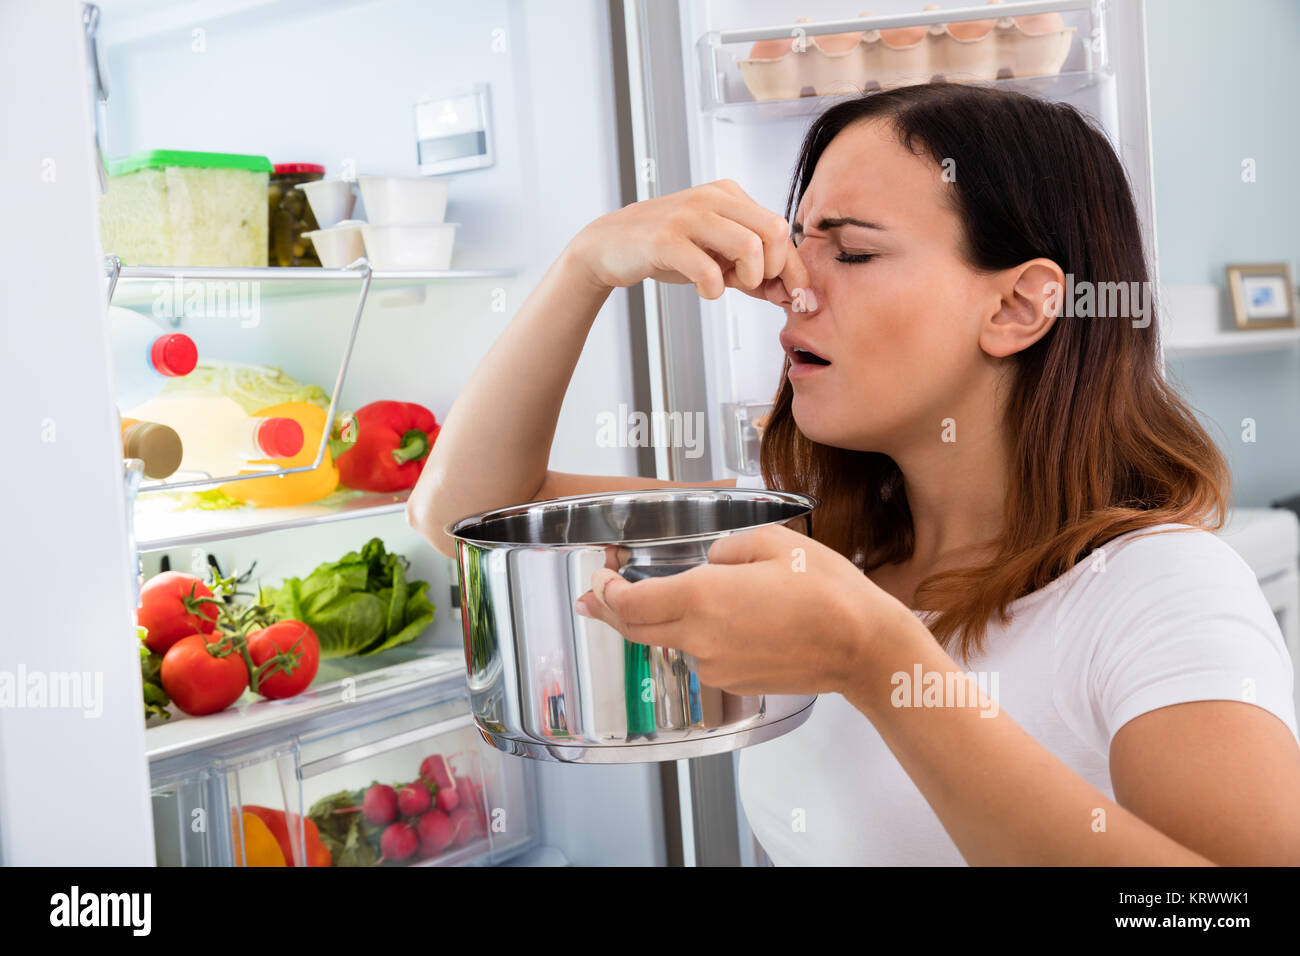 Woman Holding Foul Food Near Refrigerator Stock Photo